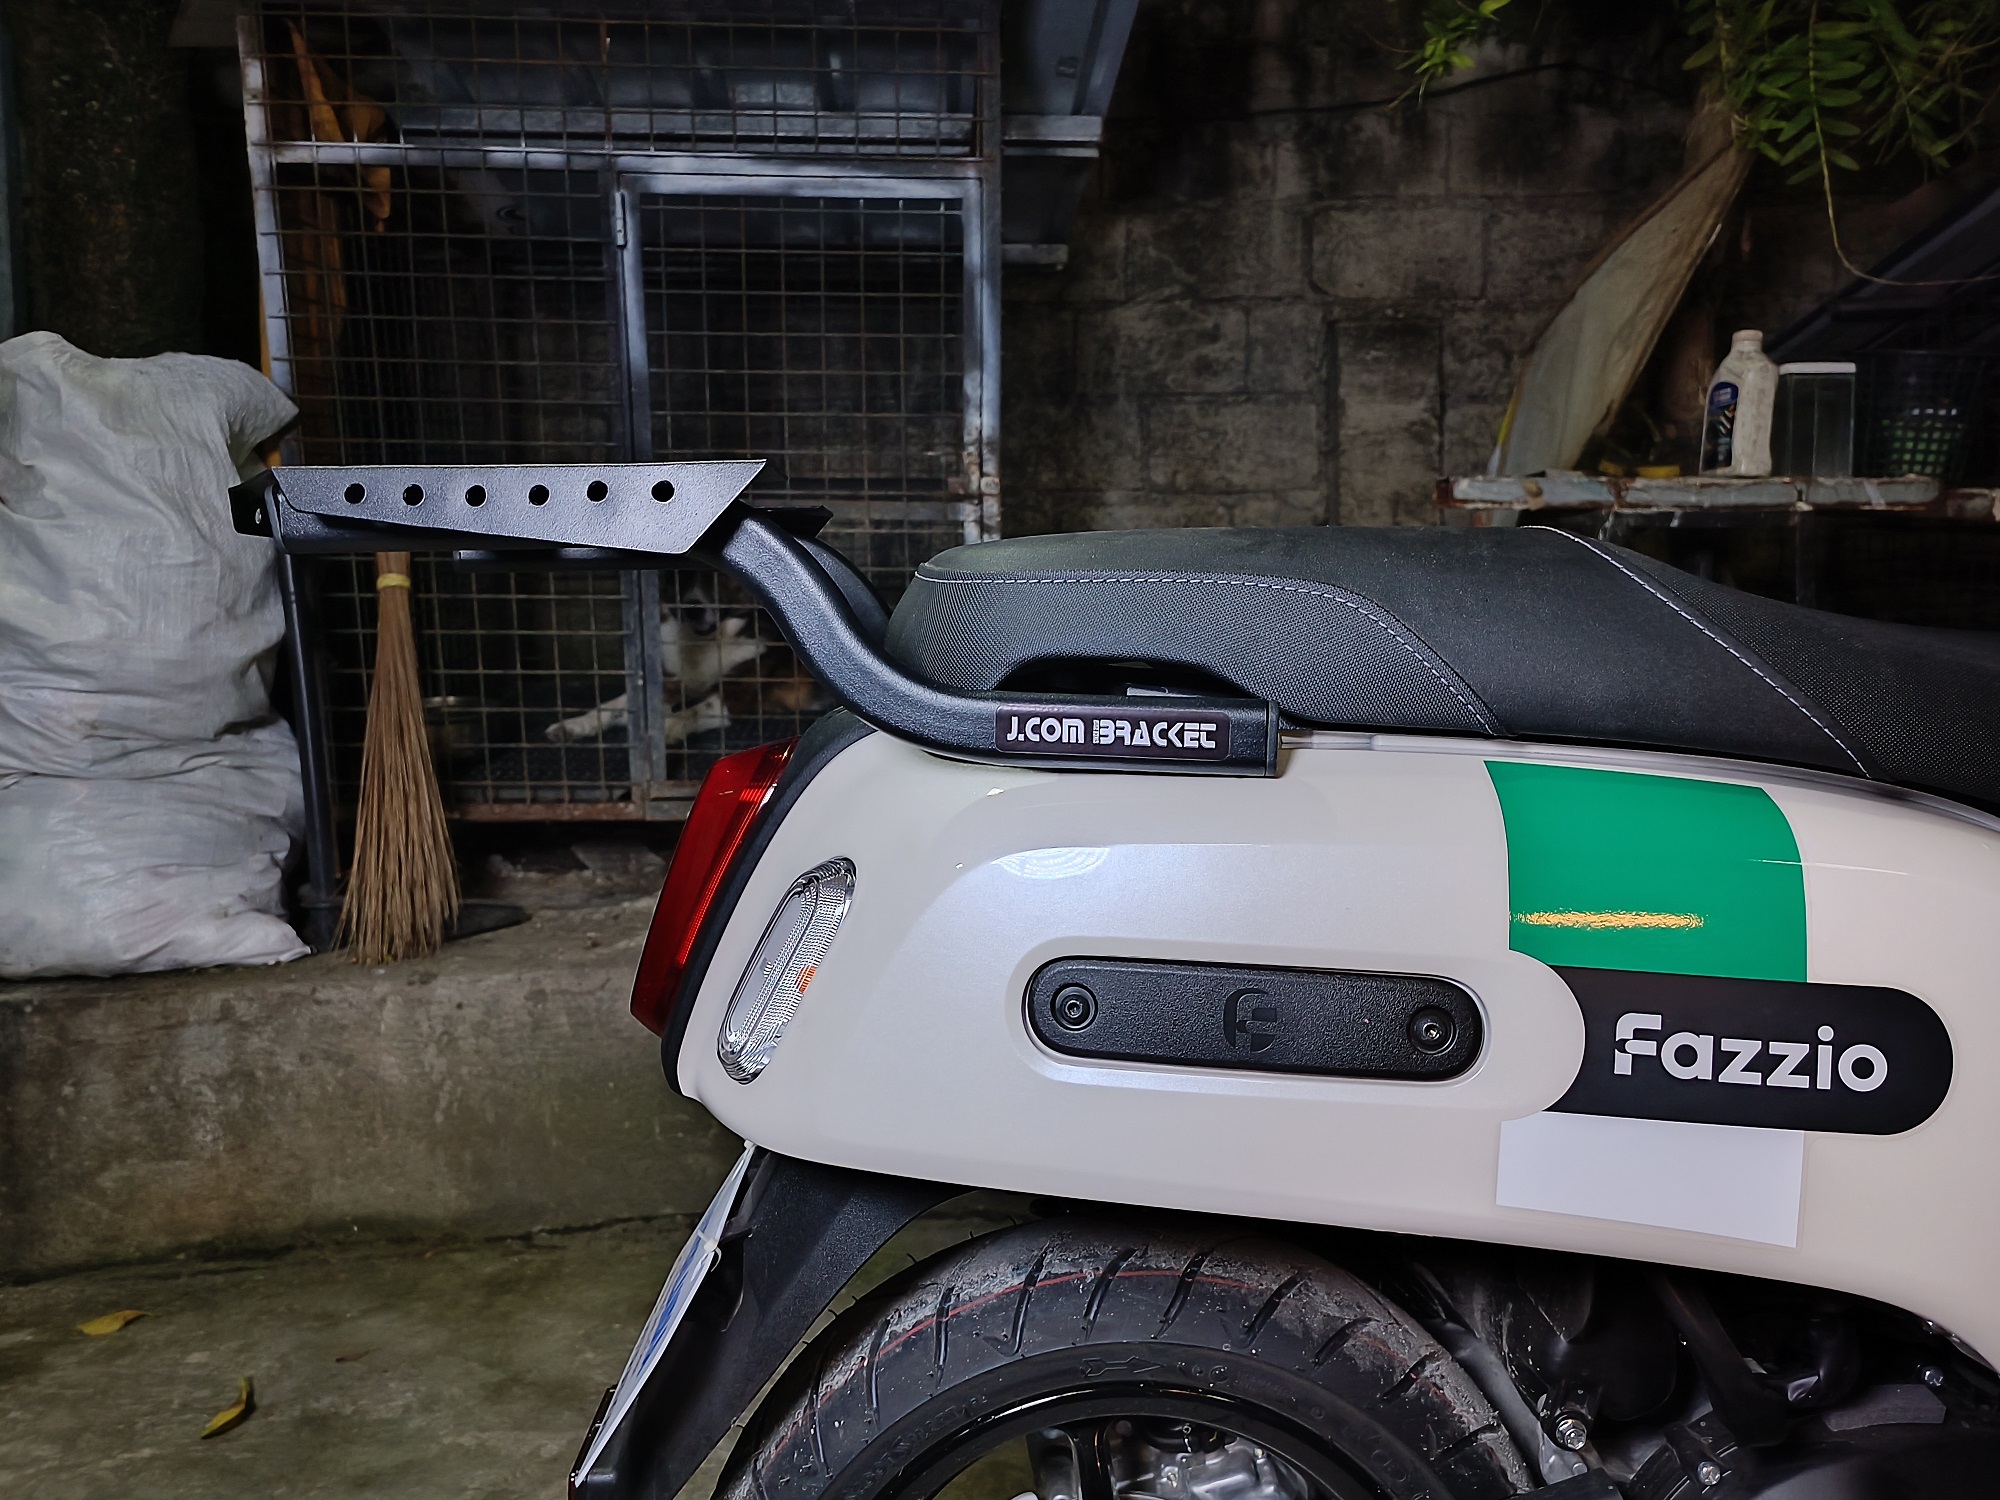 Rimowa Topbox for my Yamaha Fazzio!🛵🖤 #minivlog #yamahafazzio #fazzi